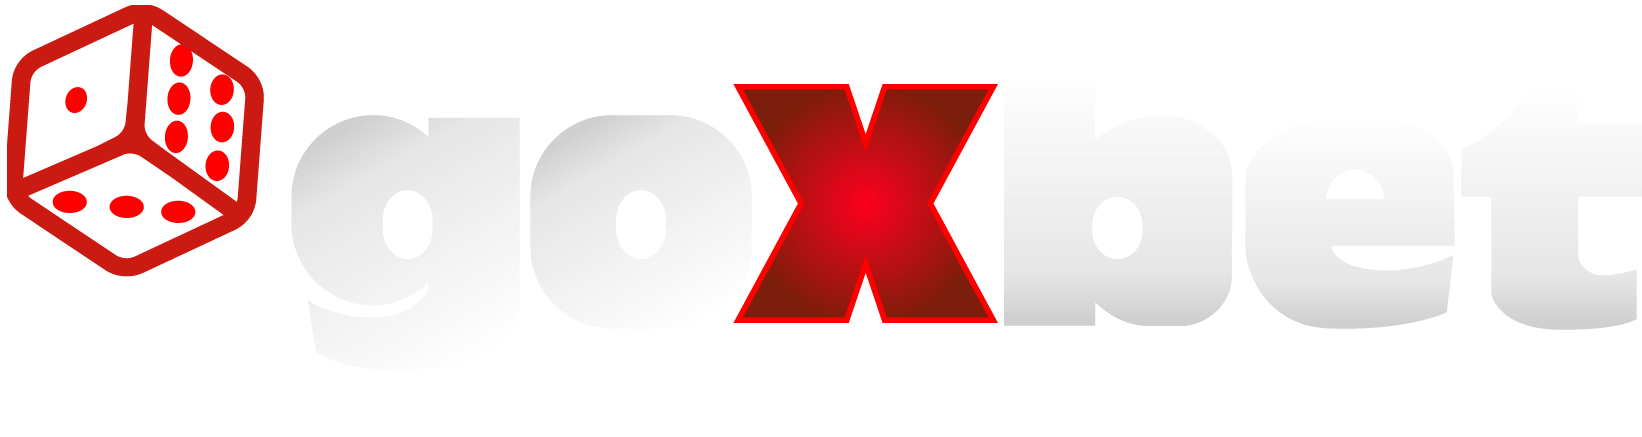 GoxBet logo